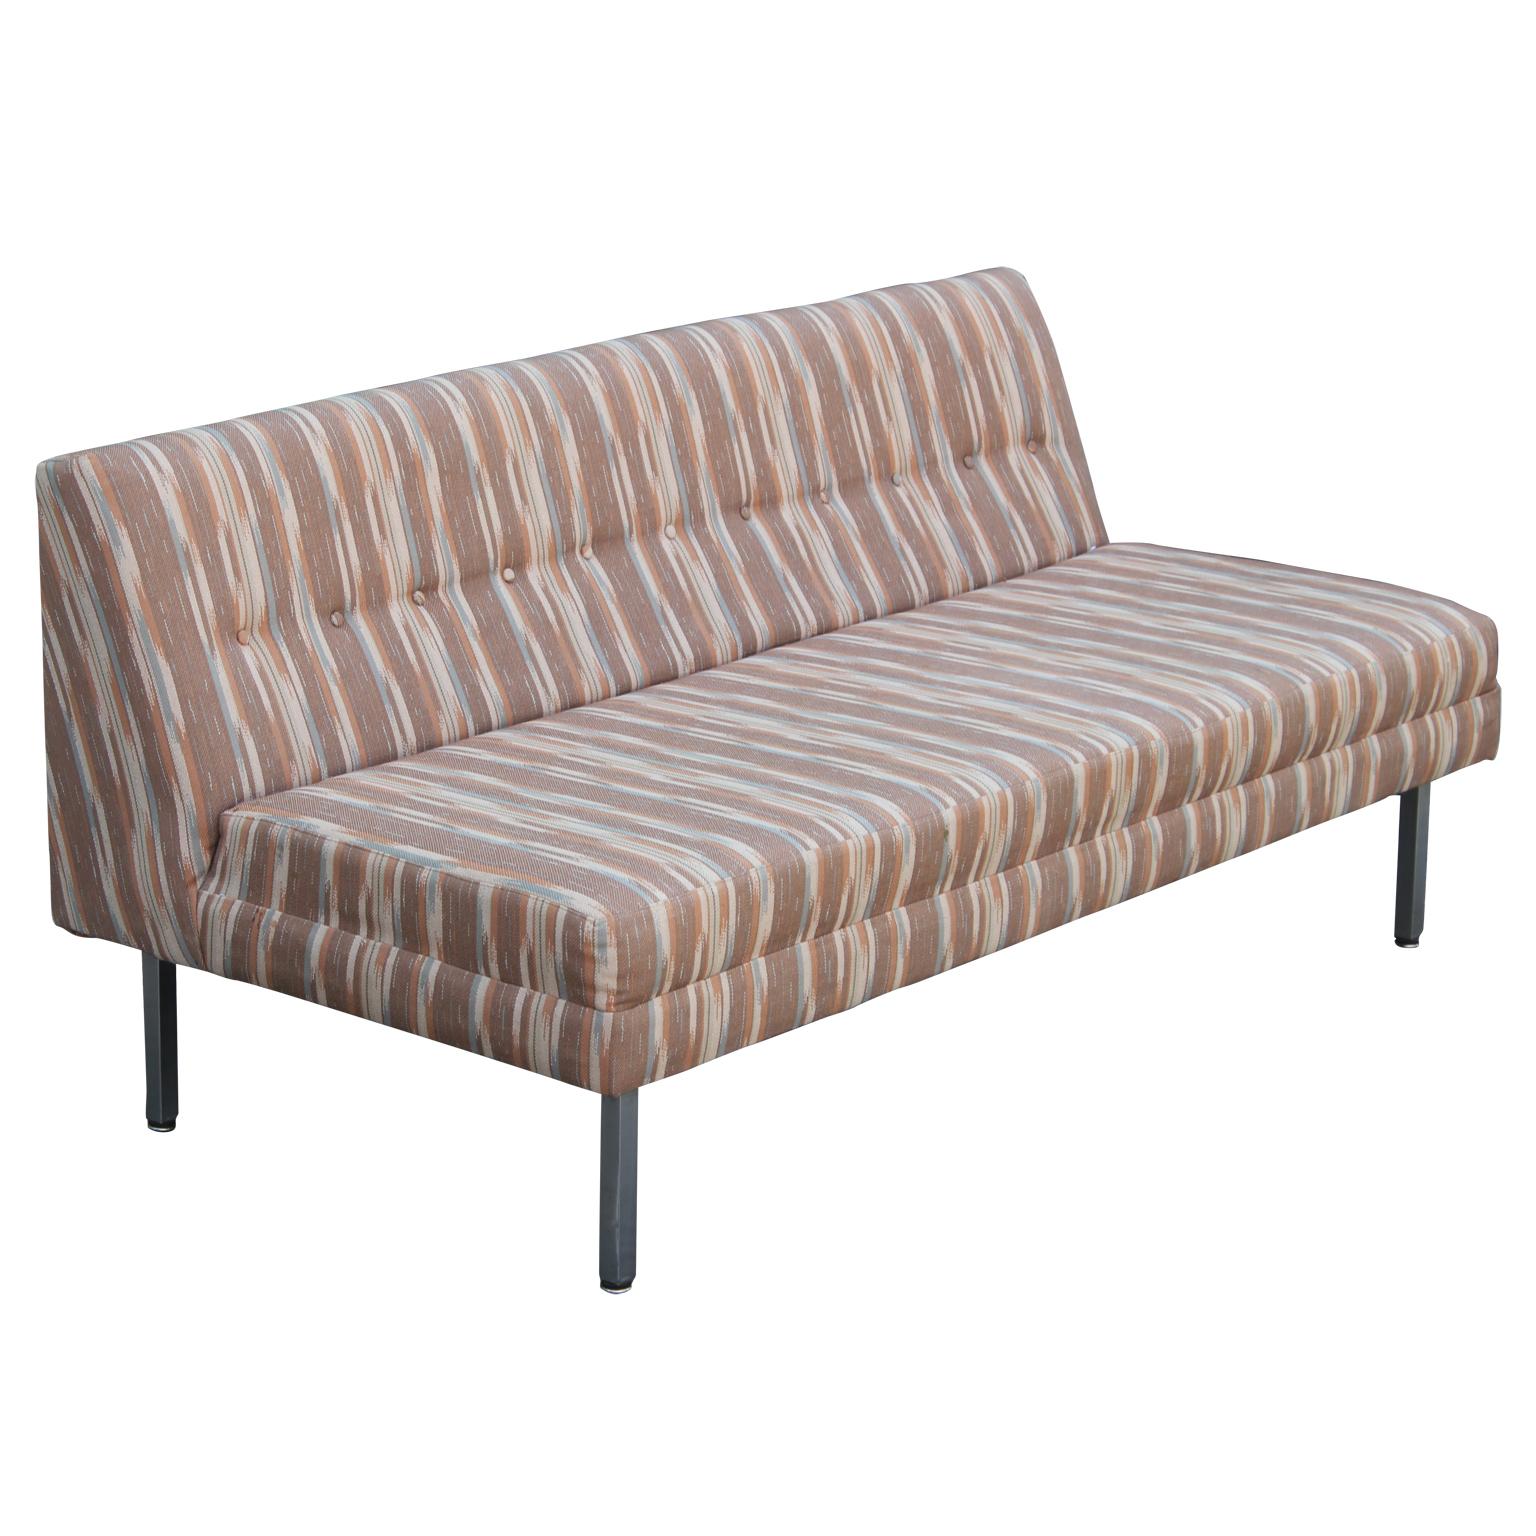 Mid-20th Century Modern George Nelson for Herman Miller Modular Group Sofa